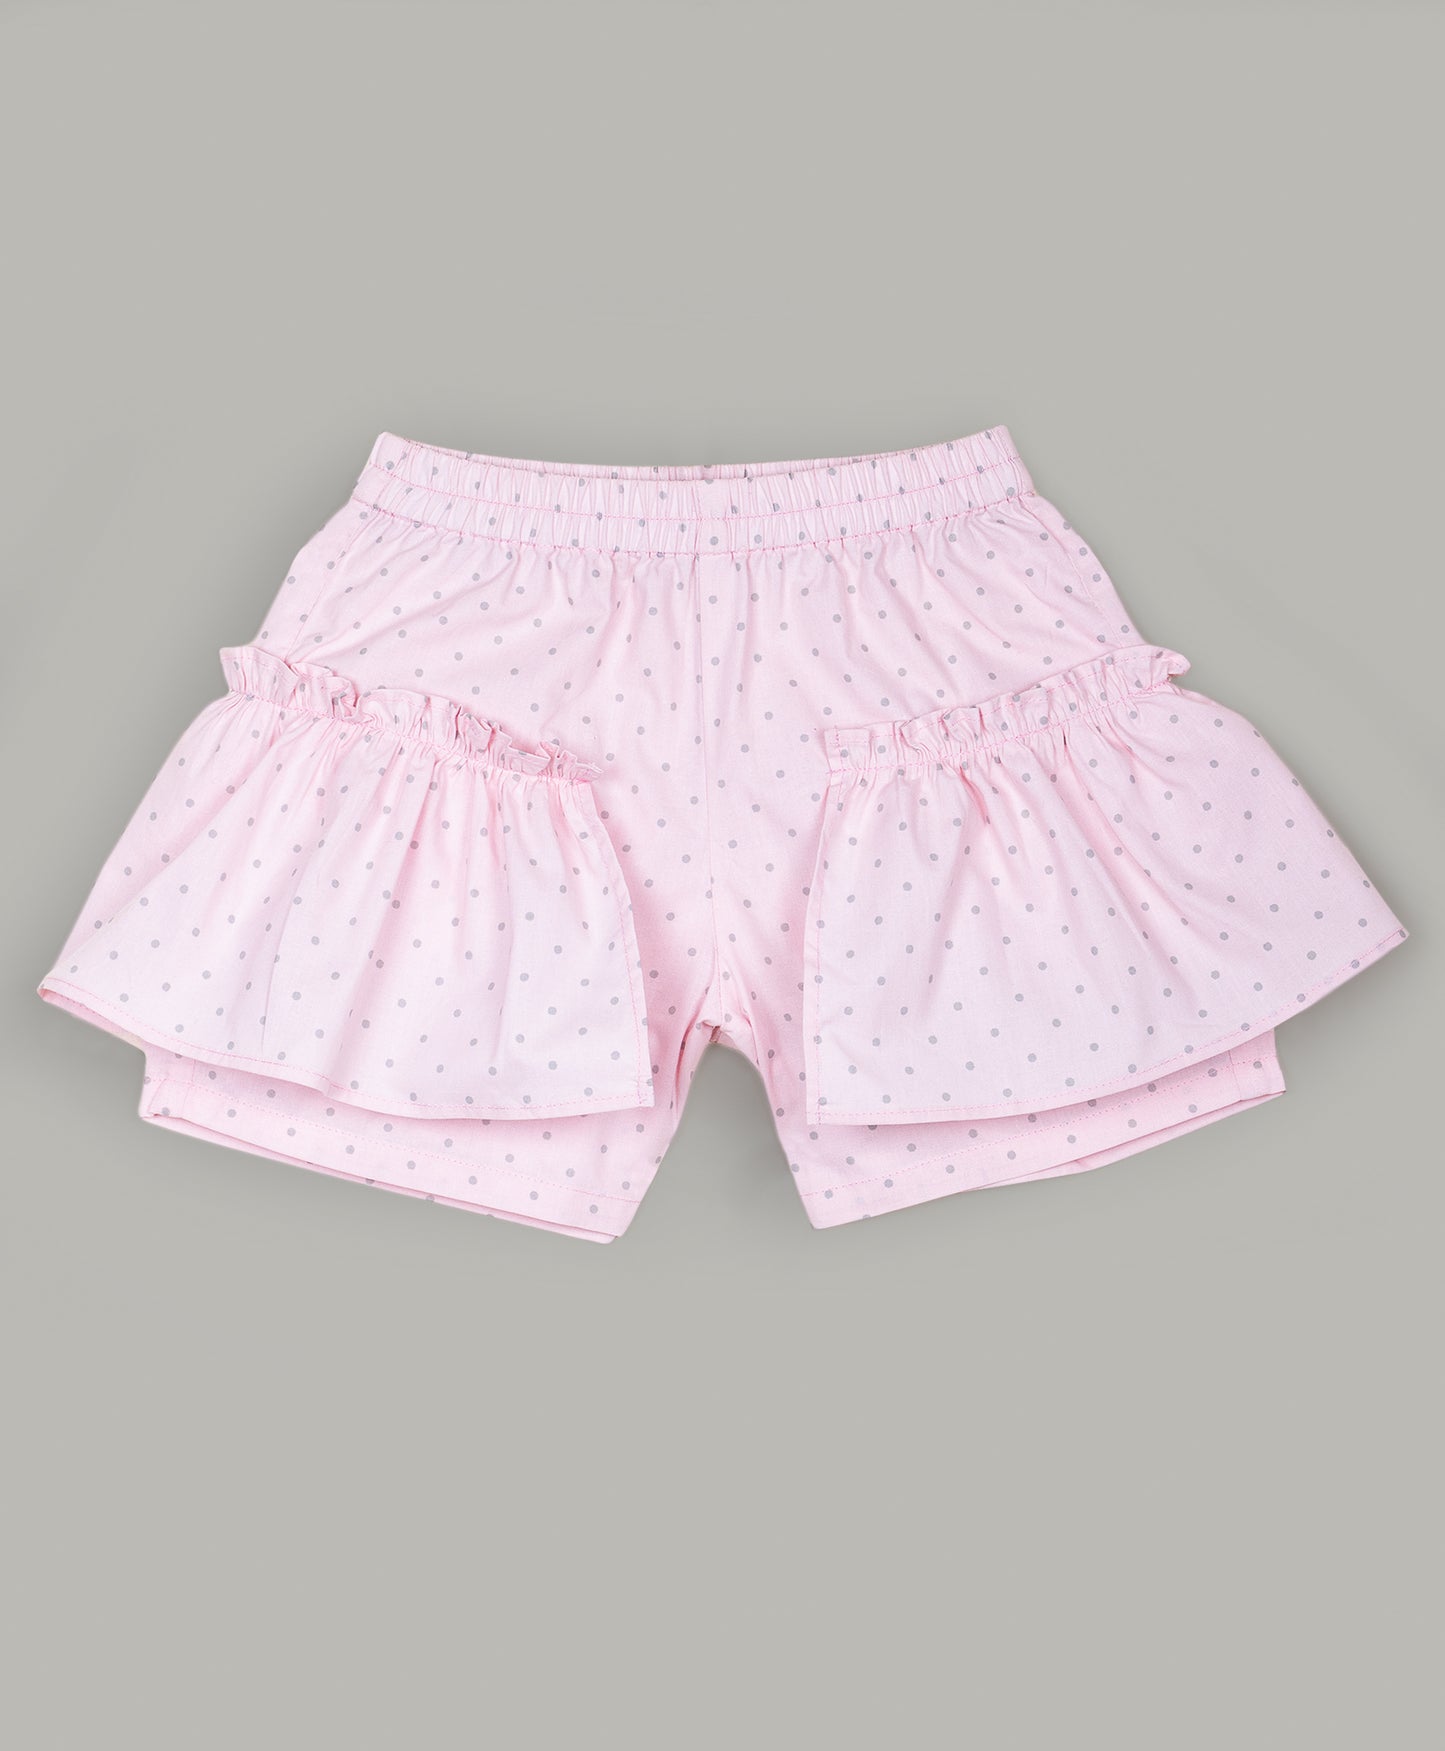 Pastel Pink shorts with grey dots